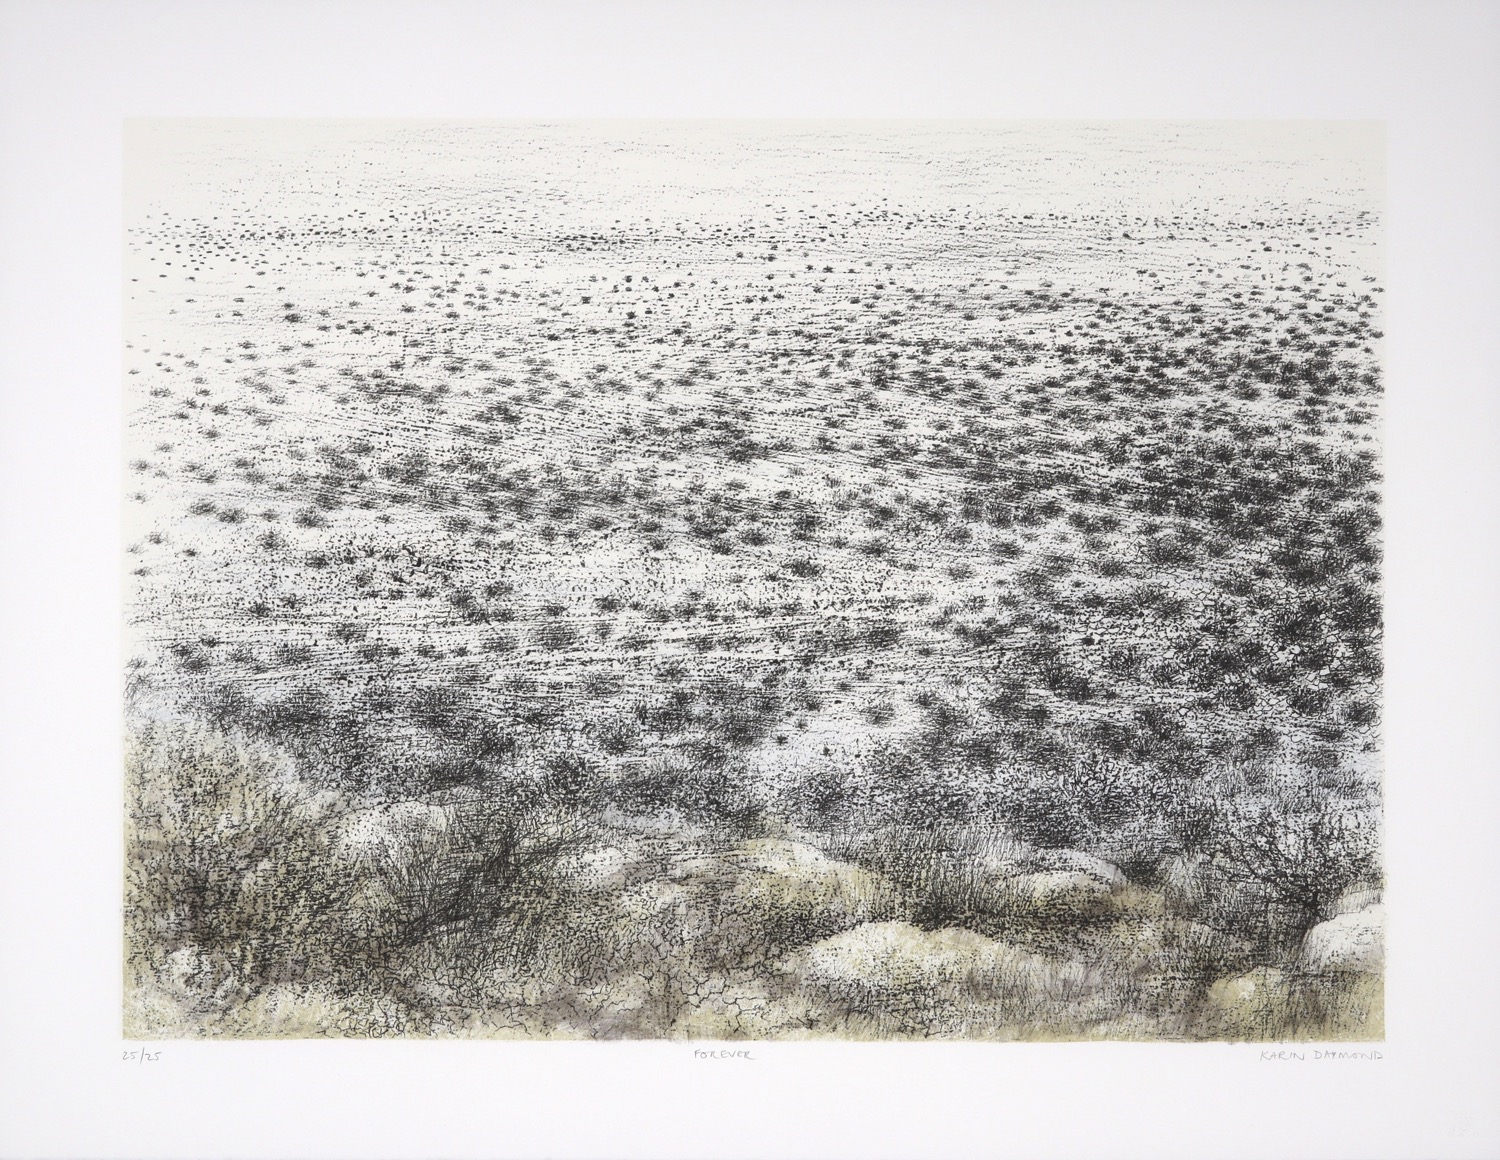 Monochromatic landscape showing the vastness of the Kalahari veld